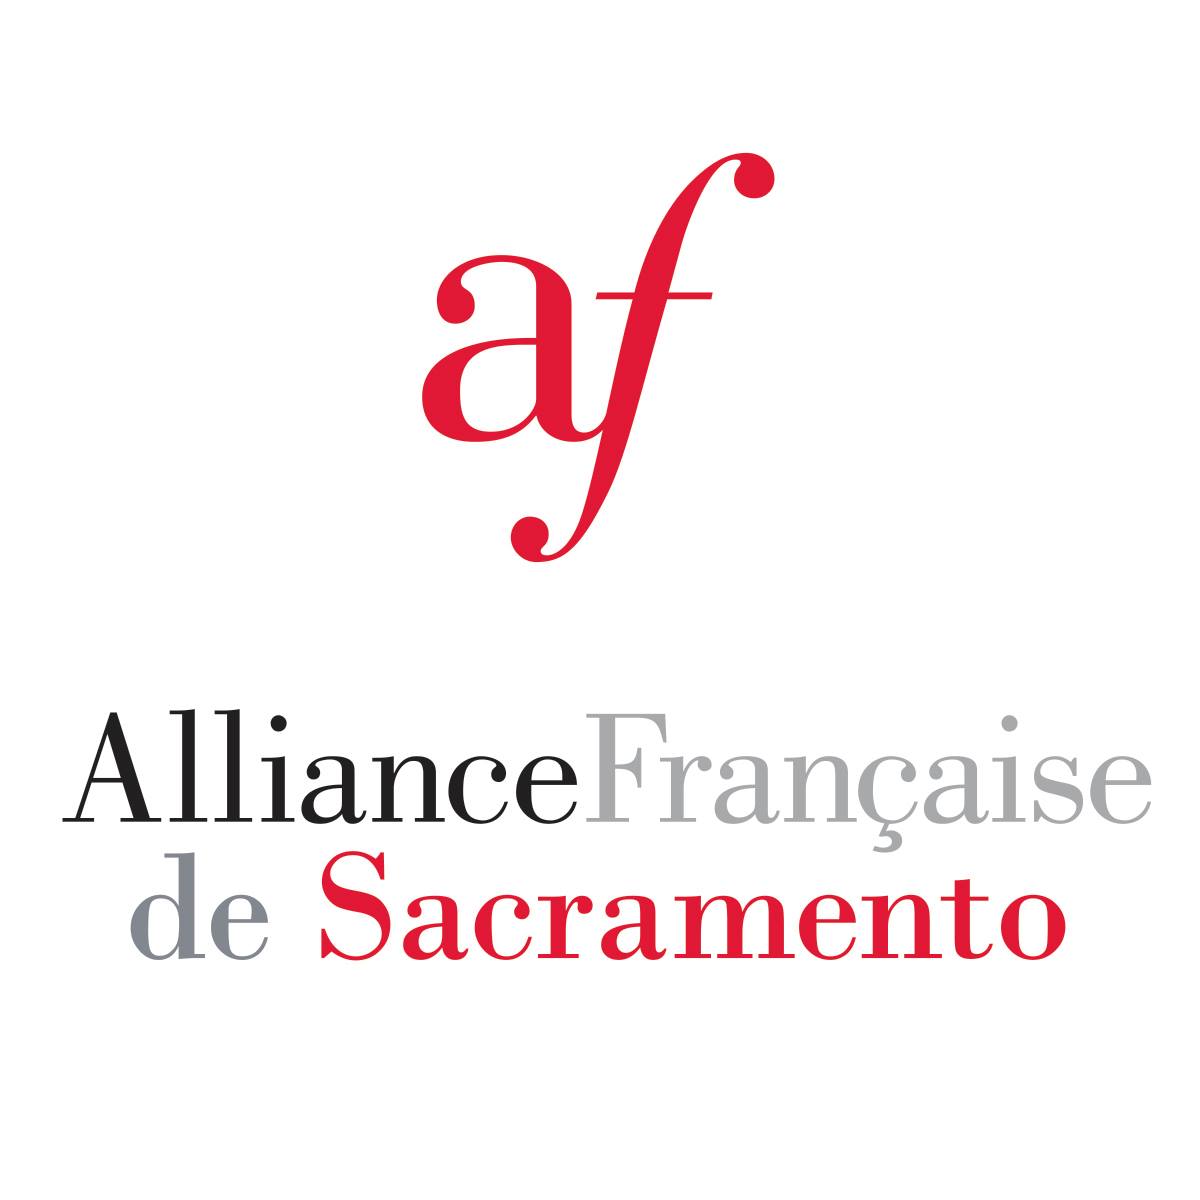 French Organization in Los Angeles California - Alliance Francaise de Sacramento